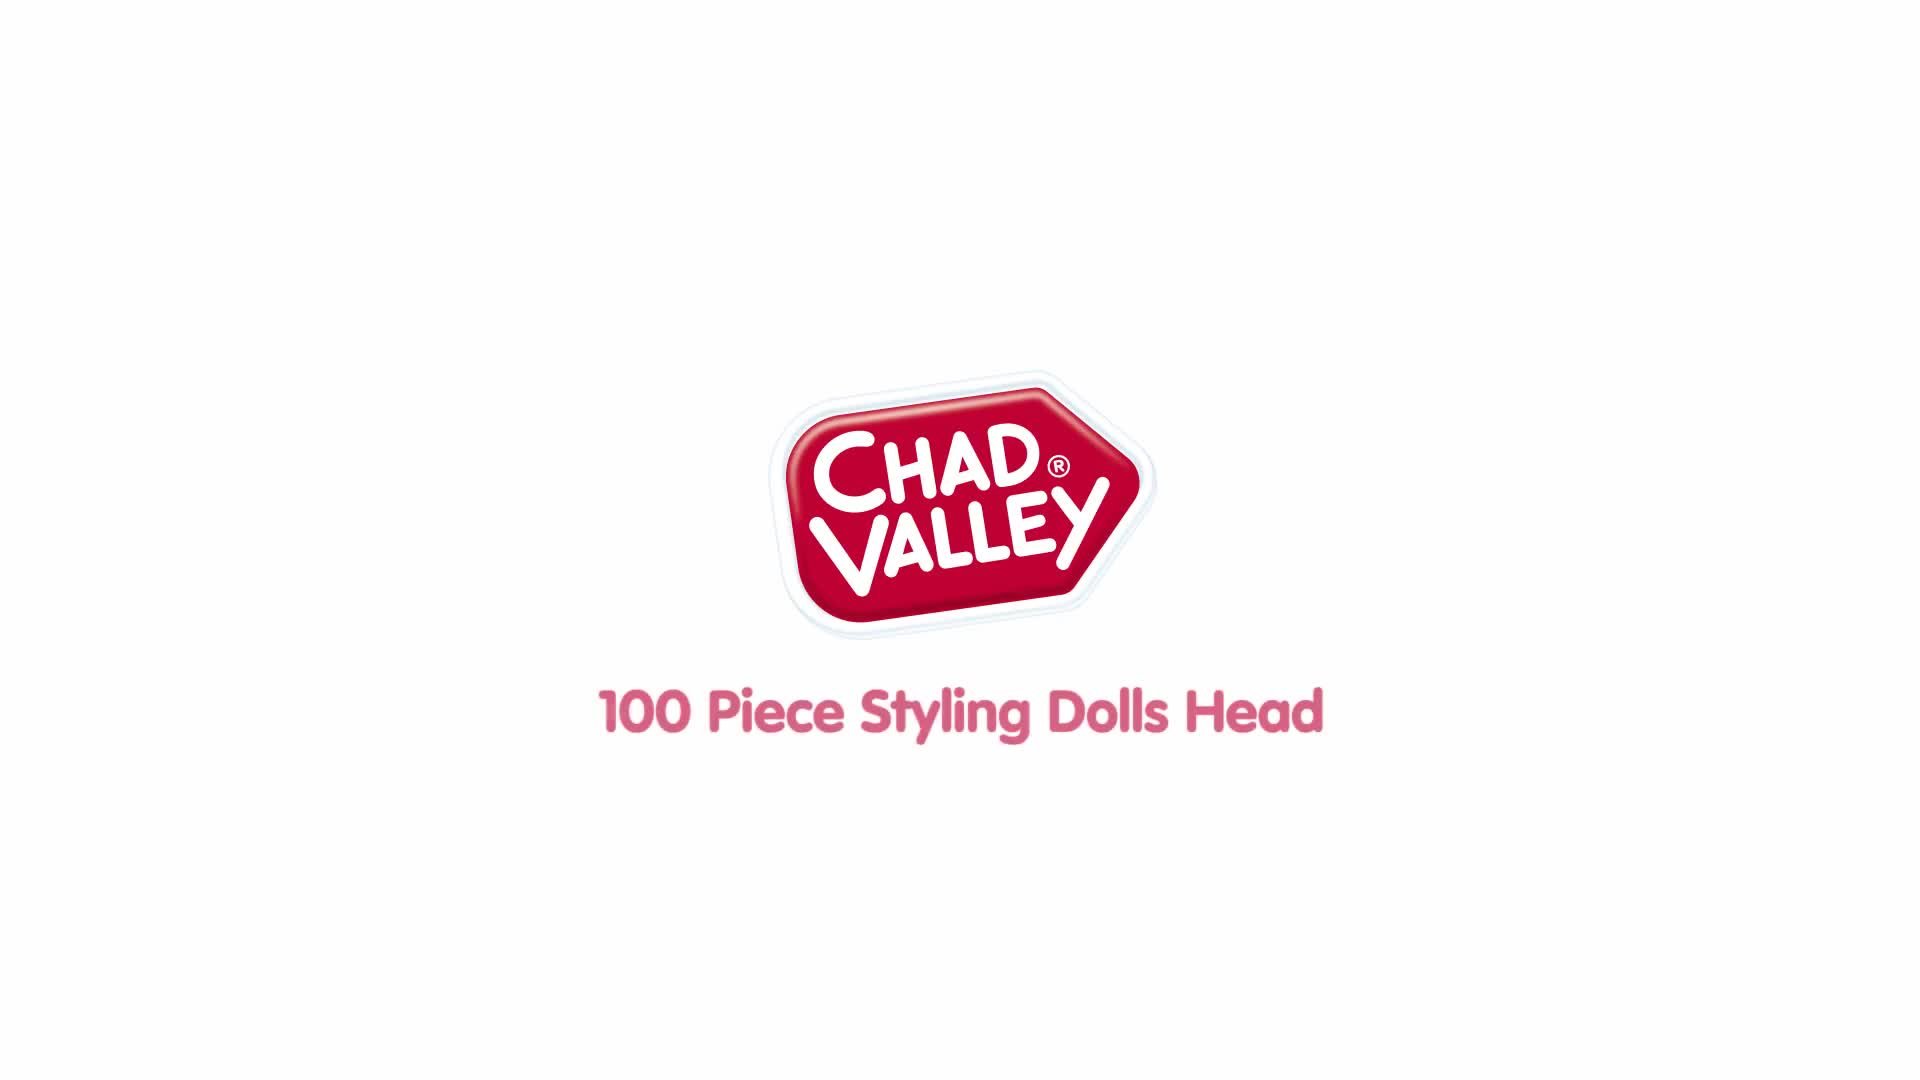 chad valley styling dolls head